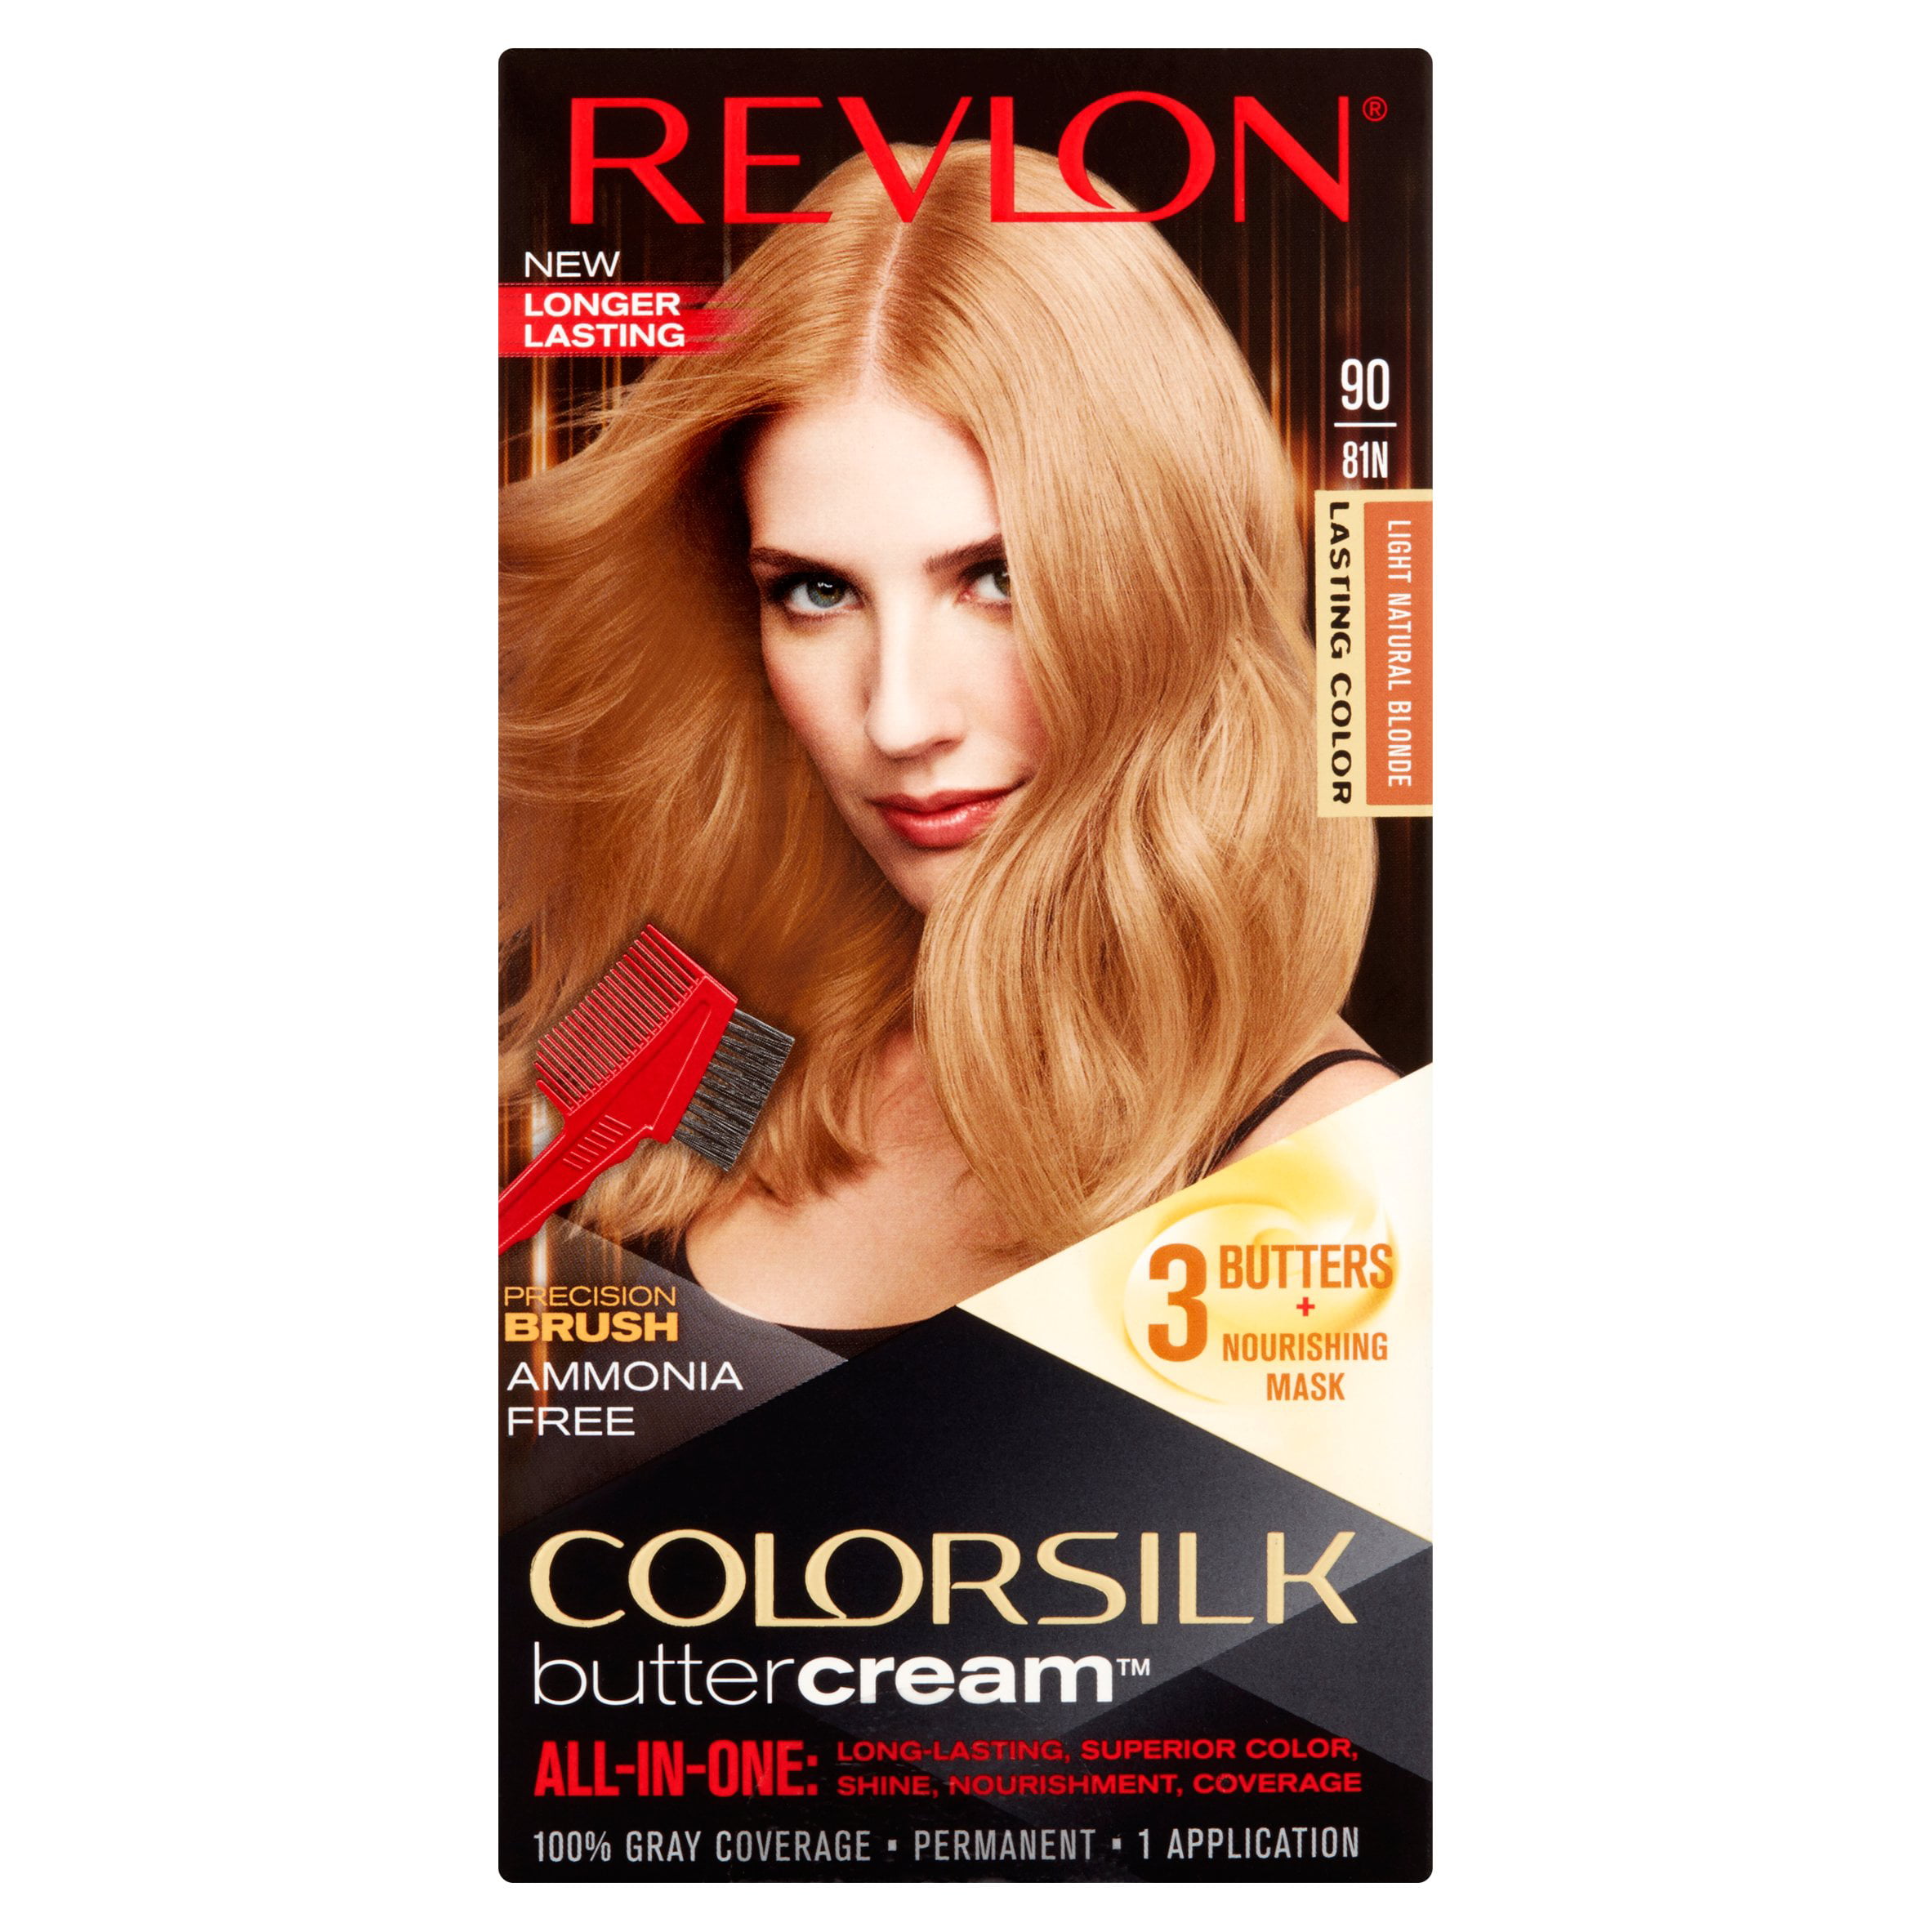 Revlon ColorSilk Buttercream™ Hair Color - Light Natural Blonde